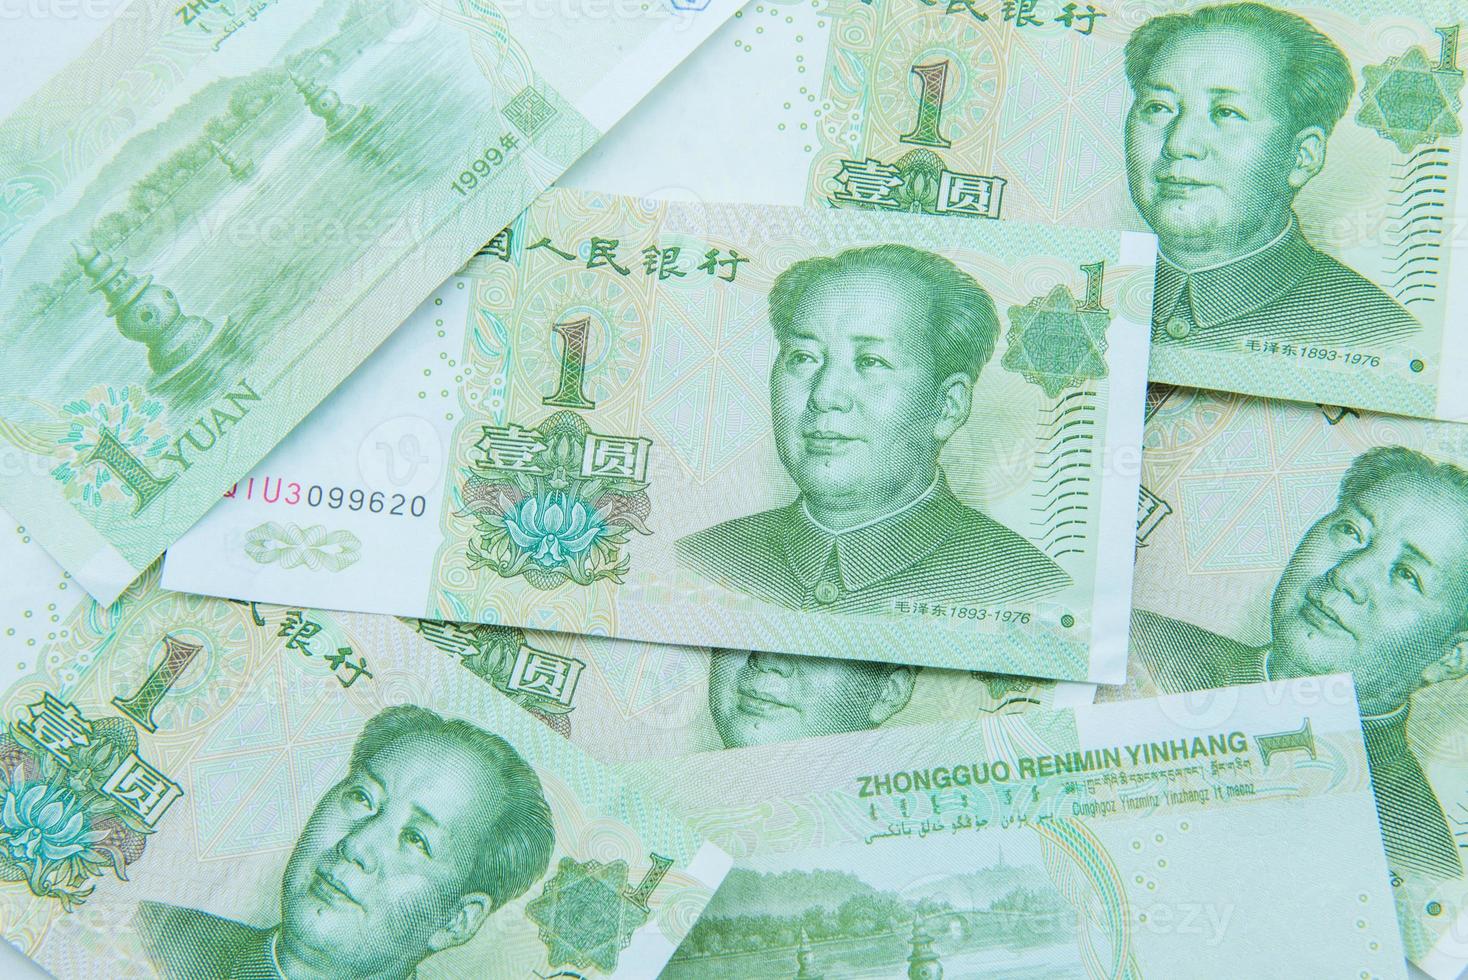 kinesisk valuta - rmb foto